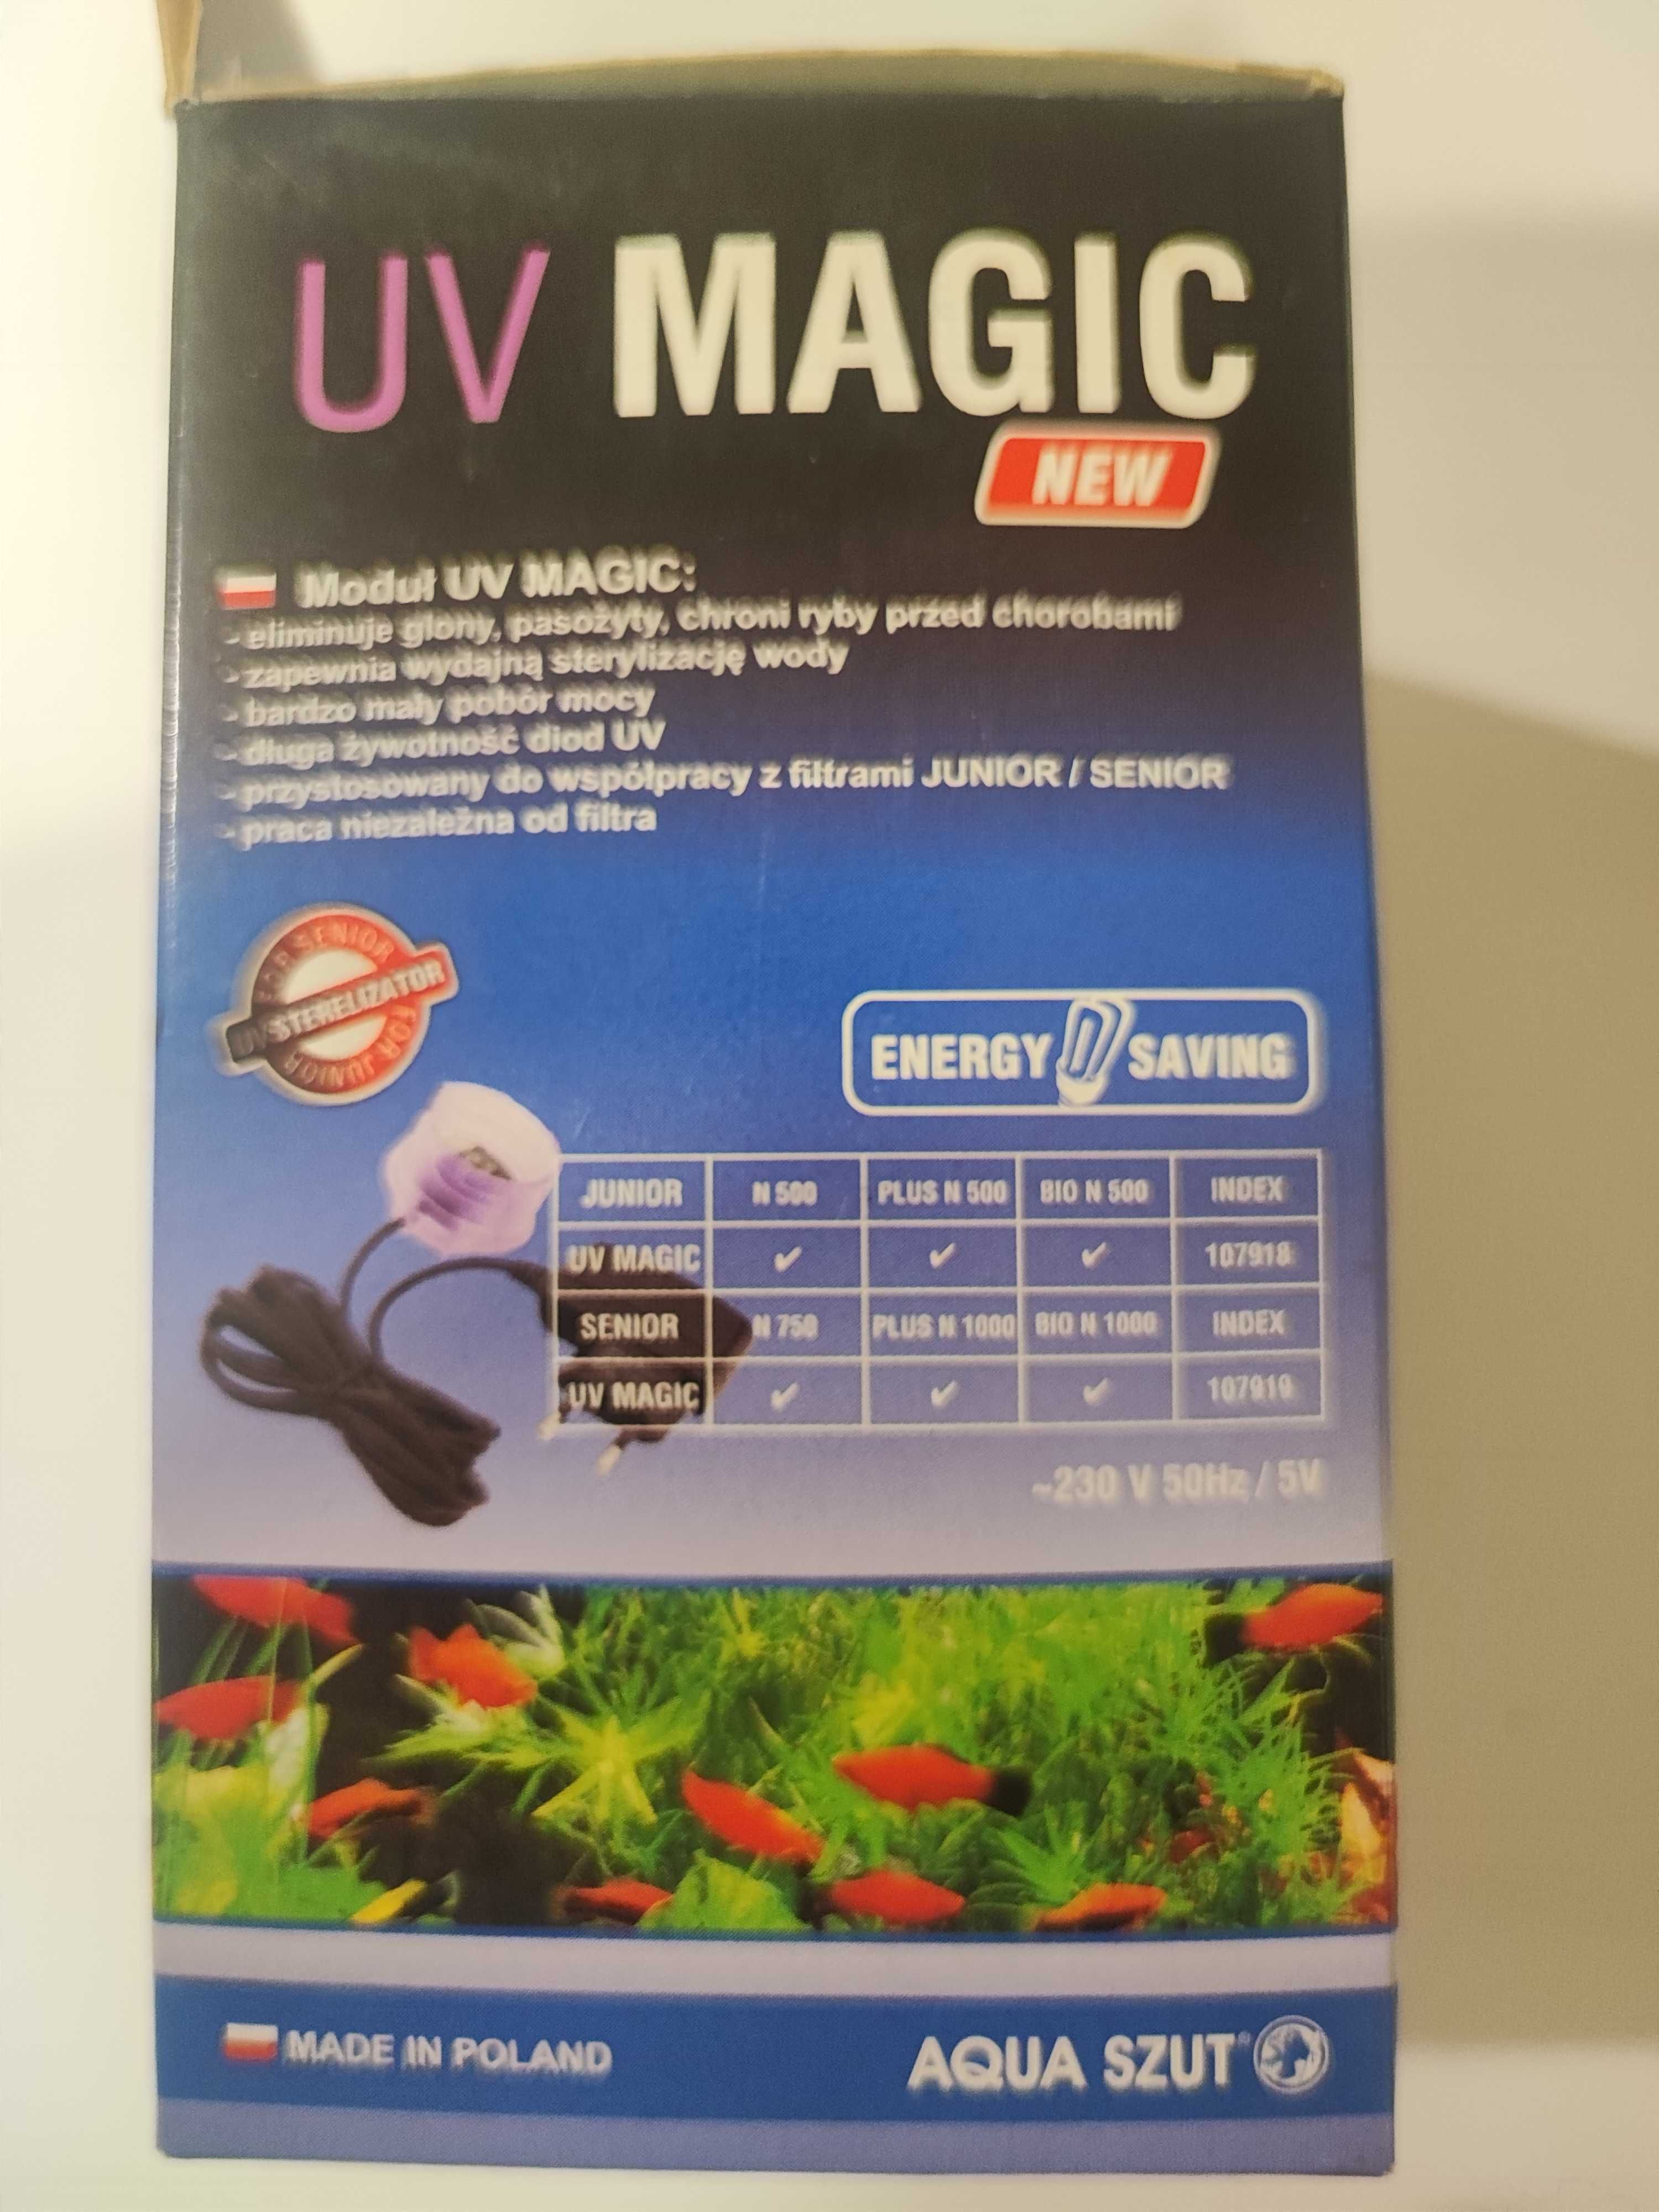 Sterylizator UV Magic do Filtra Junior/Senior Aqua Szut, zabija glony